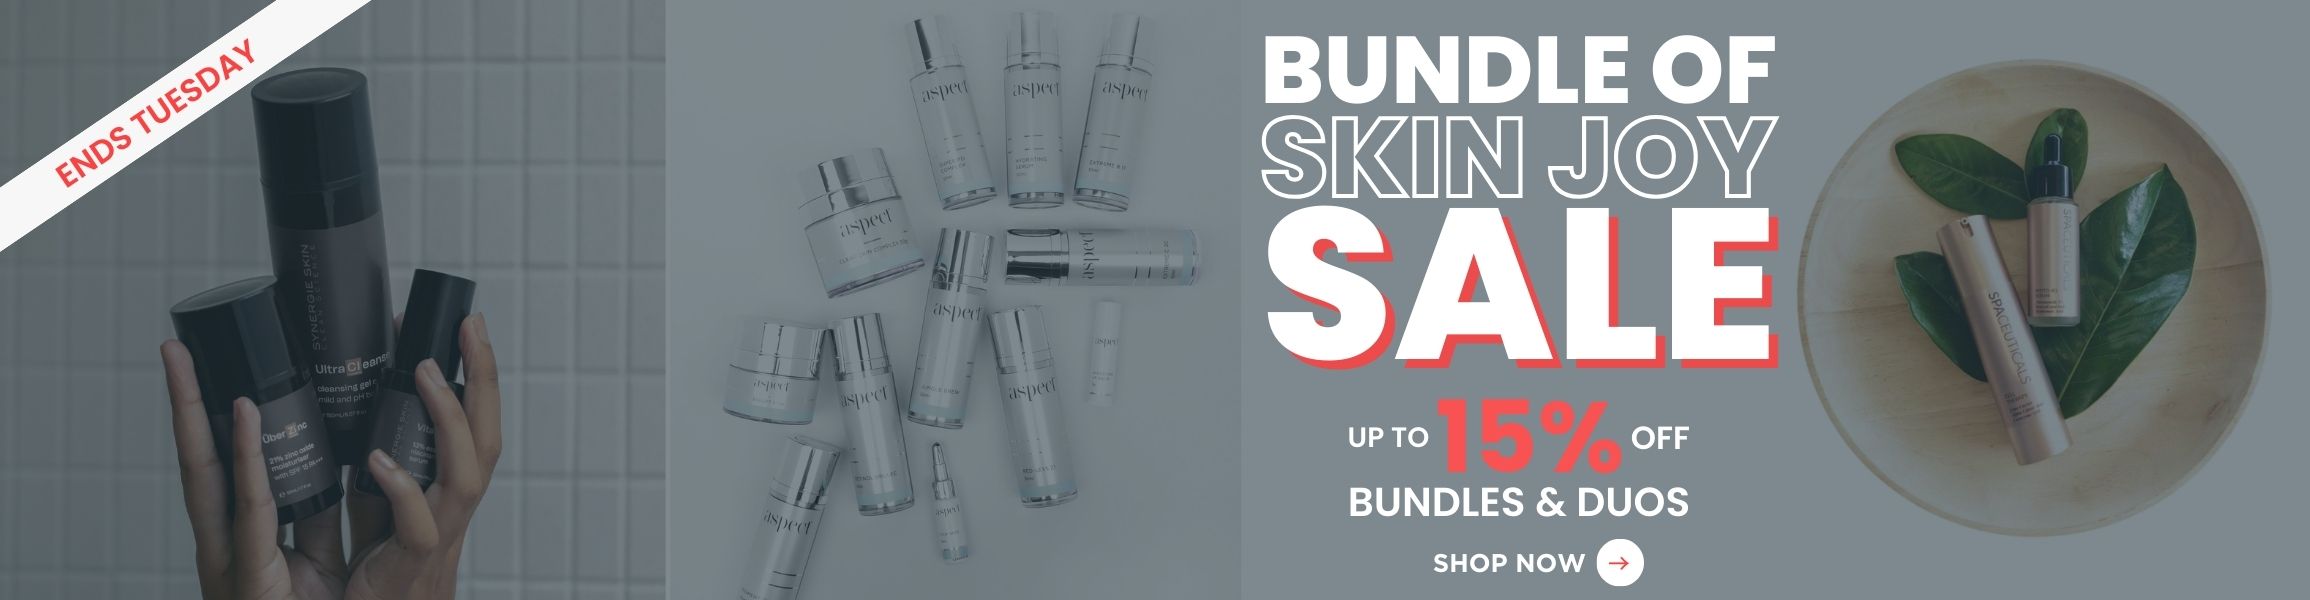 Bundle of Skin Joy Sale - Up to 15% Off Bundles & Duos